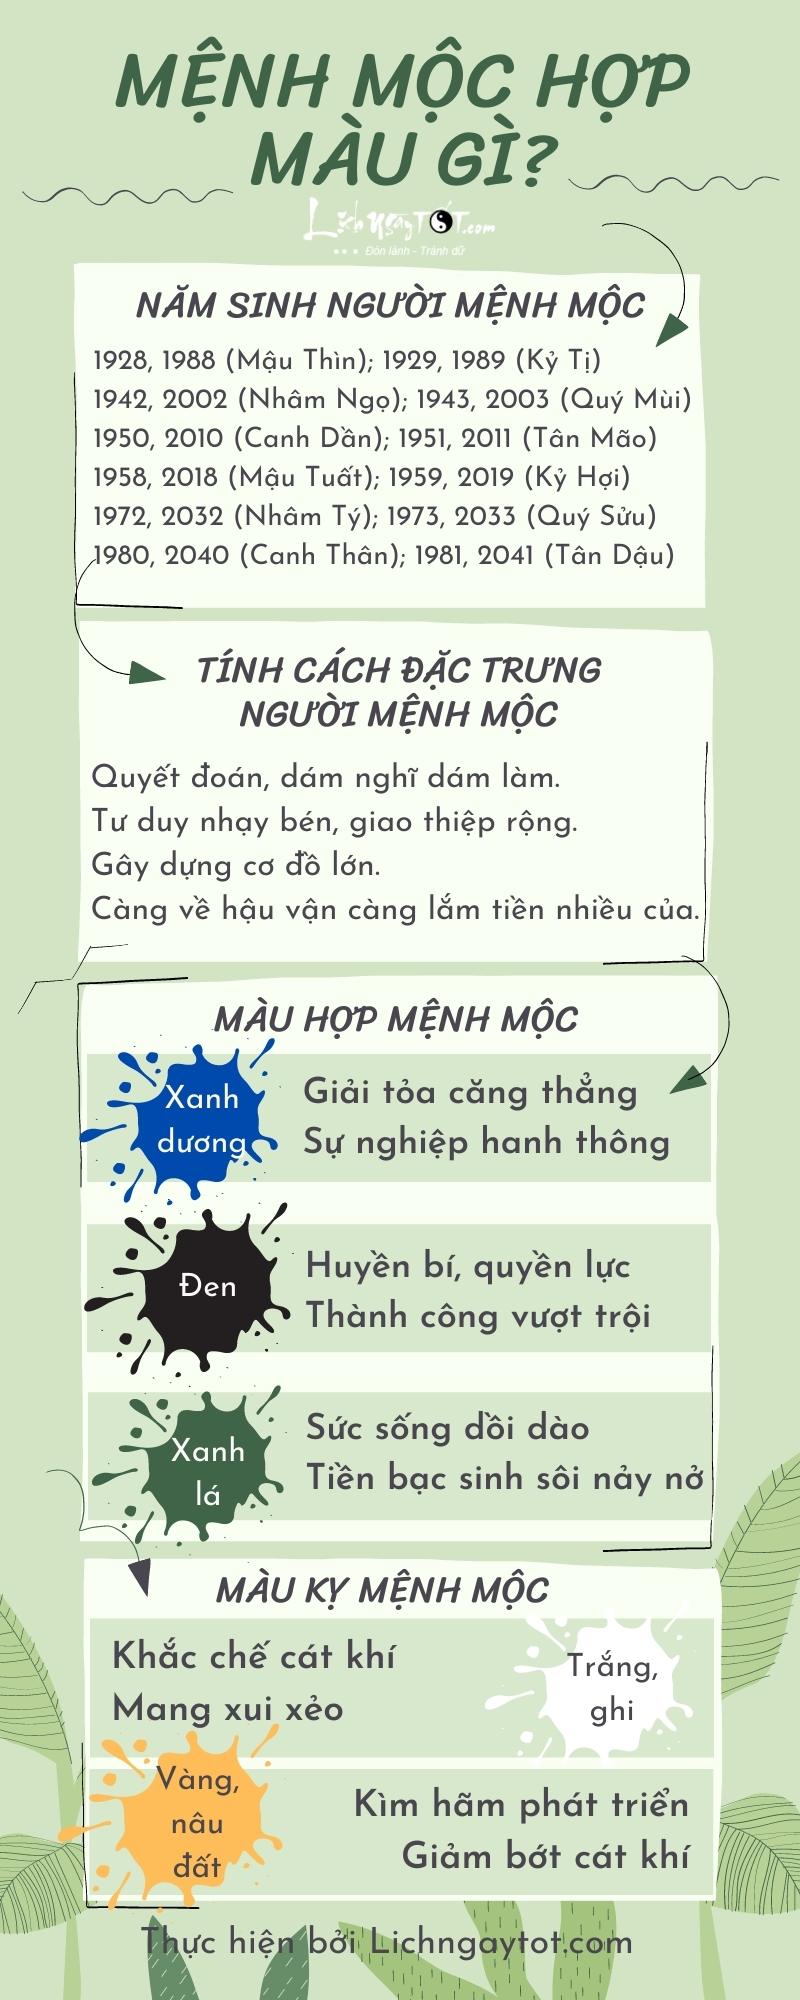 Infographic mau sac hop menh Moc